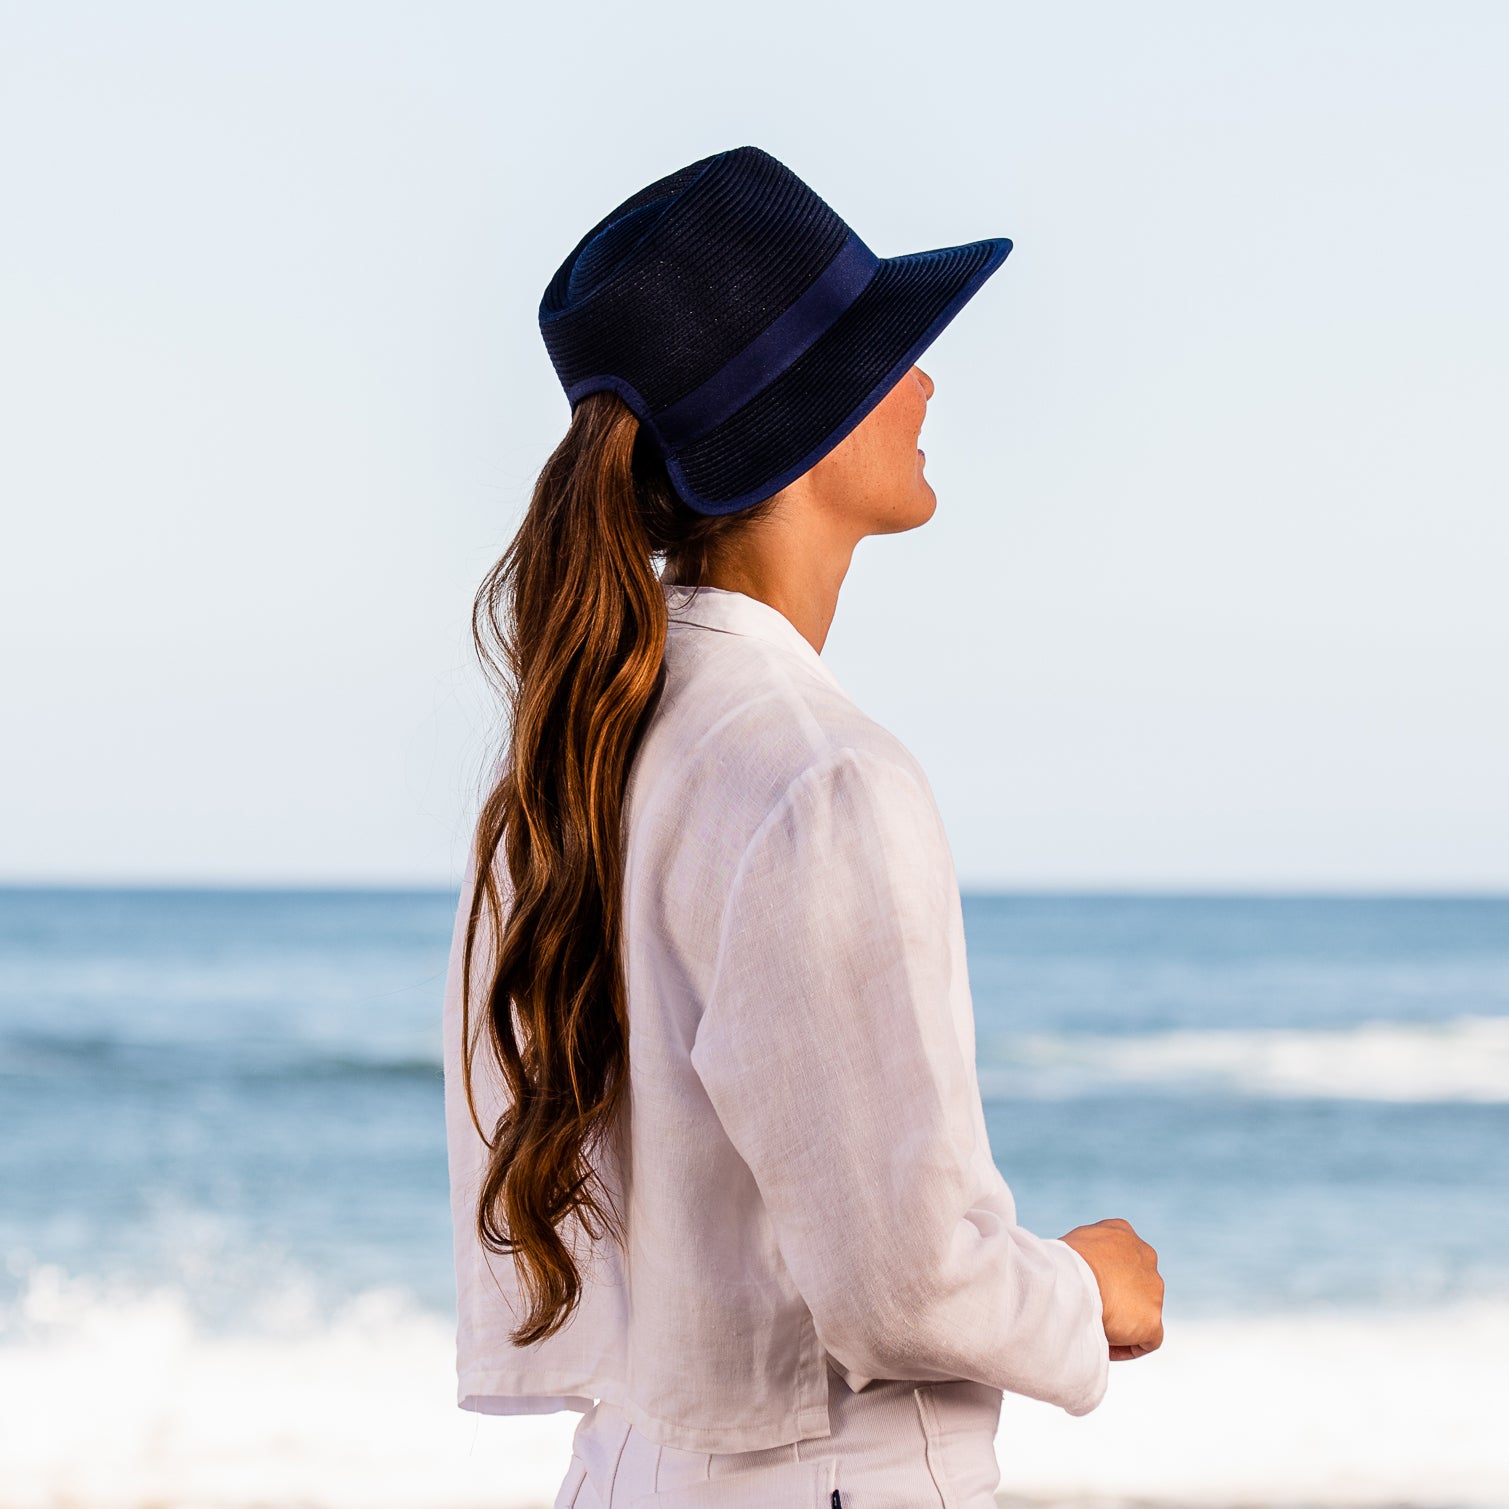 10 Best Packable Women's Sun Hats for Travel 2021